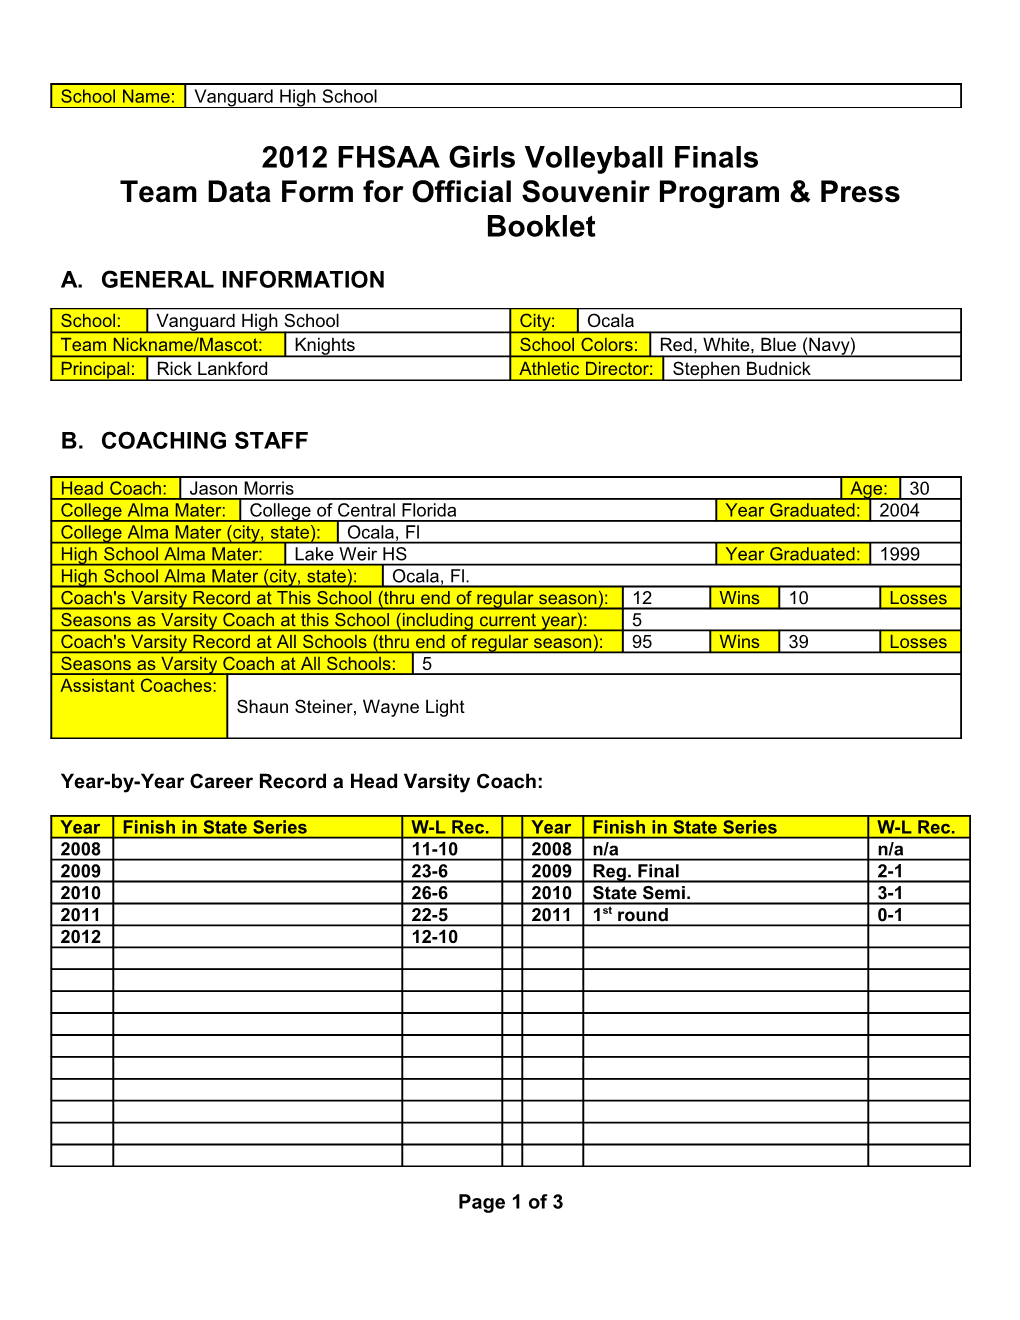 Team Data Form for Official Souvenir Program & Press Booklet